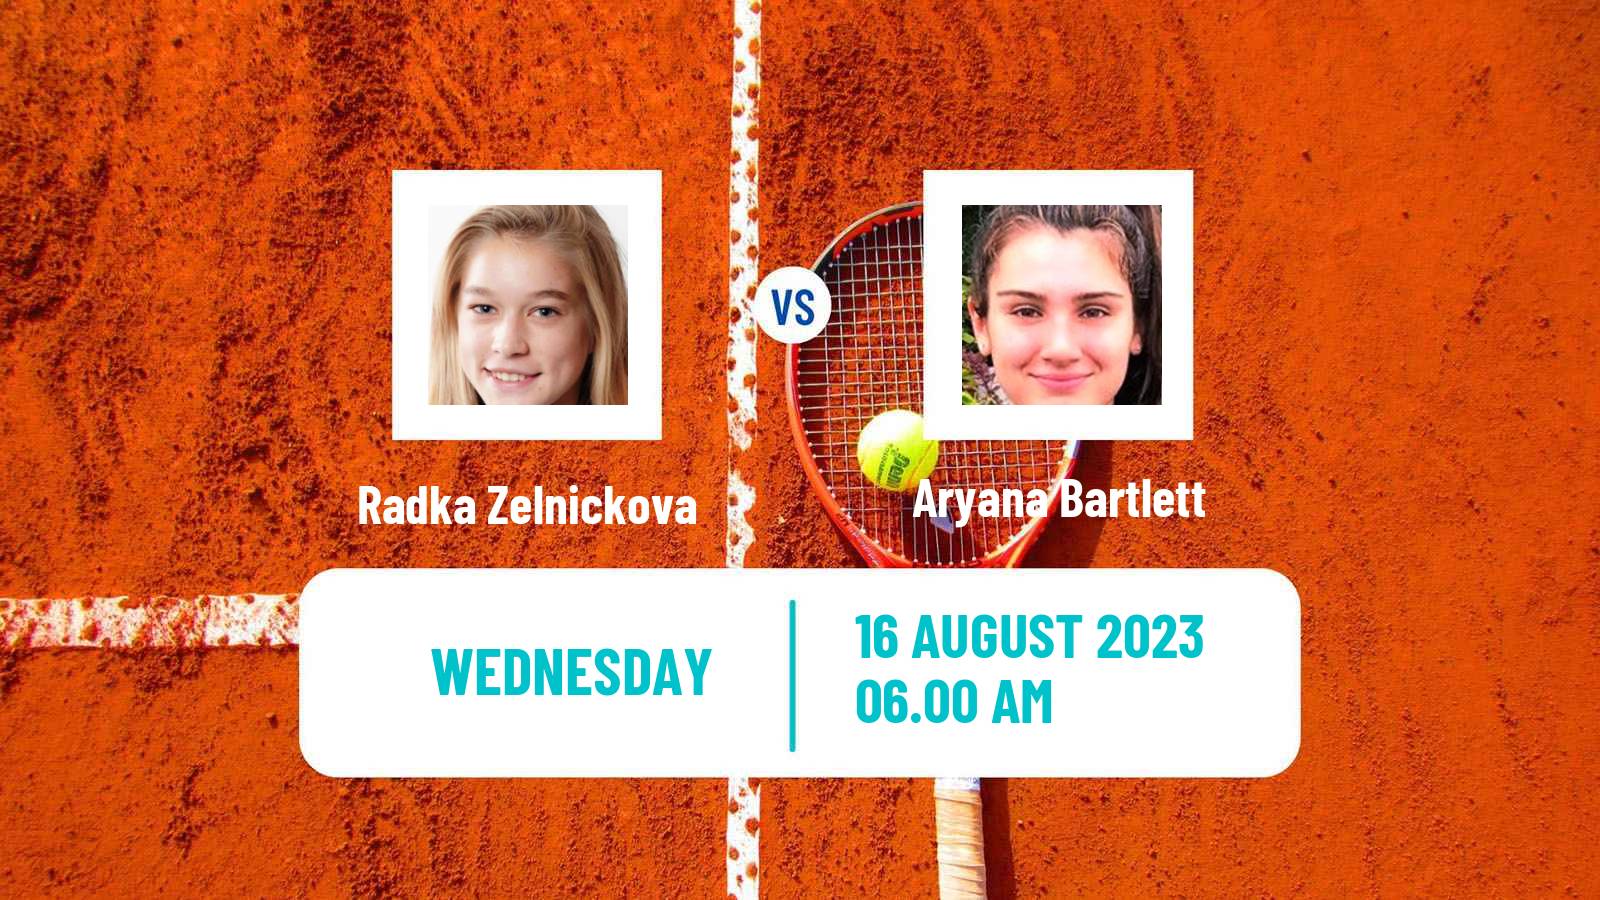 Tennis ITF W15 Monastir 28 Women Radka Zelnickova - Aryana Bartlett